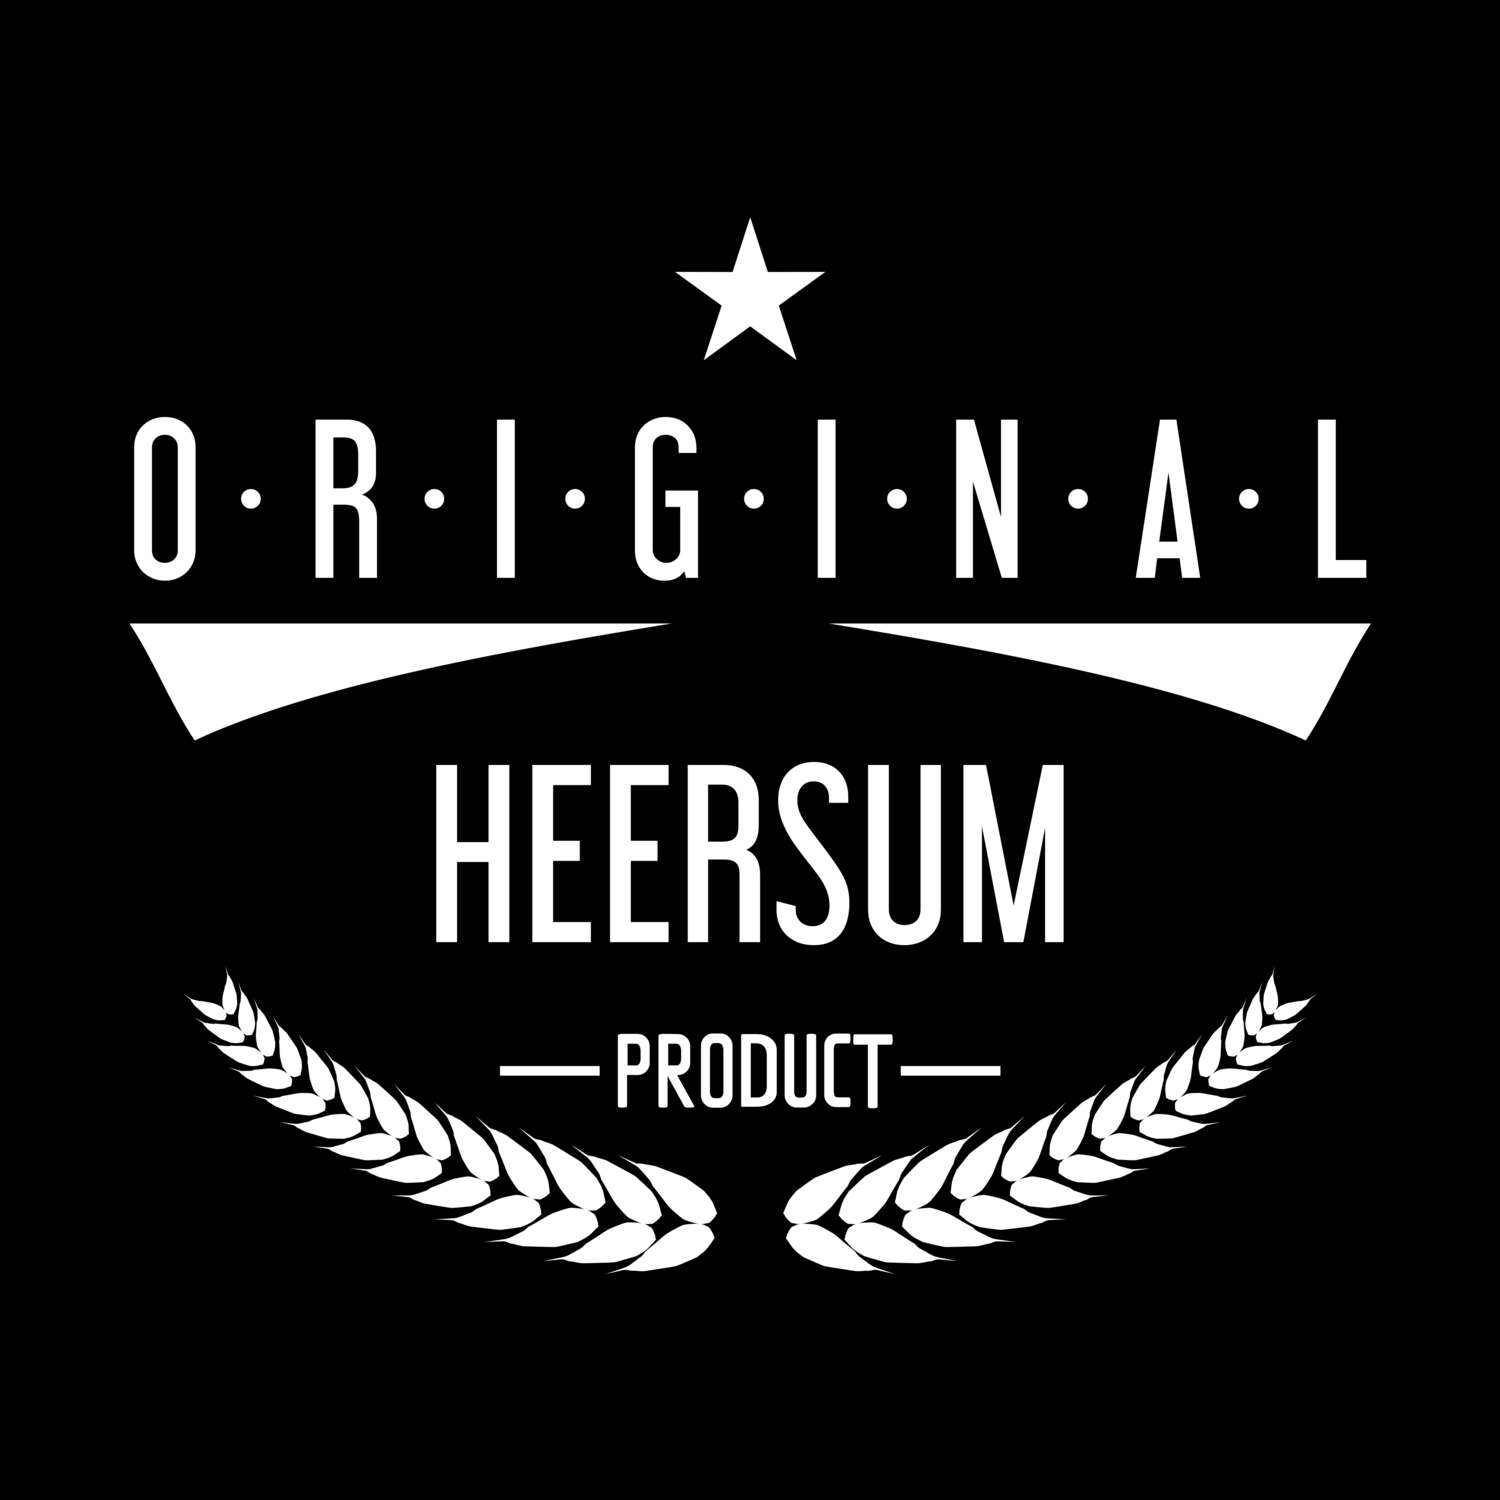 Heersum T-Shirt »Original Product«